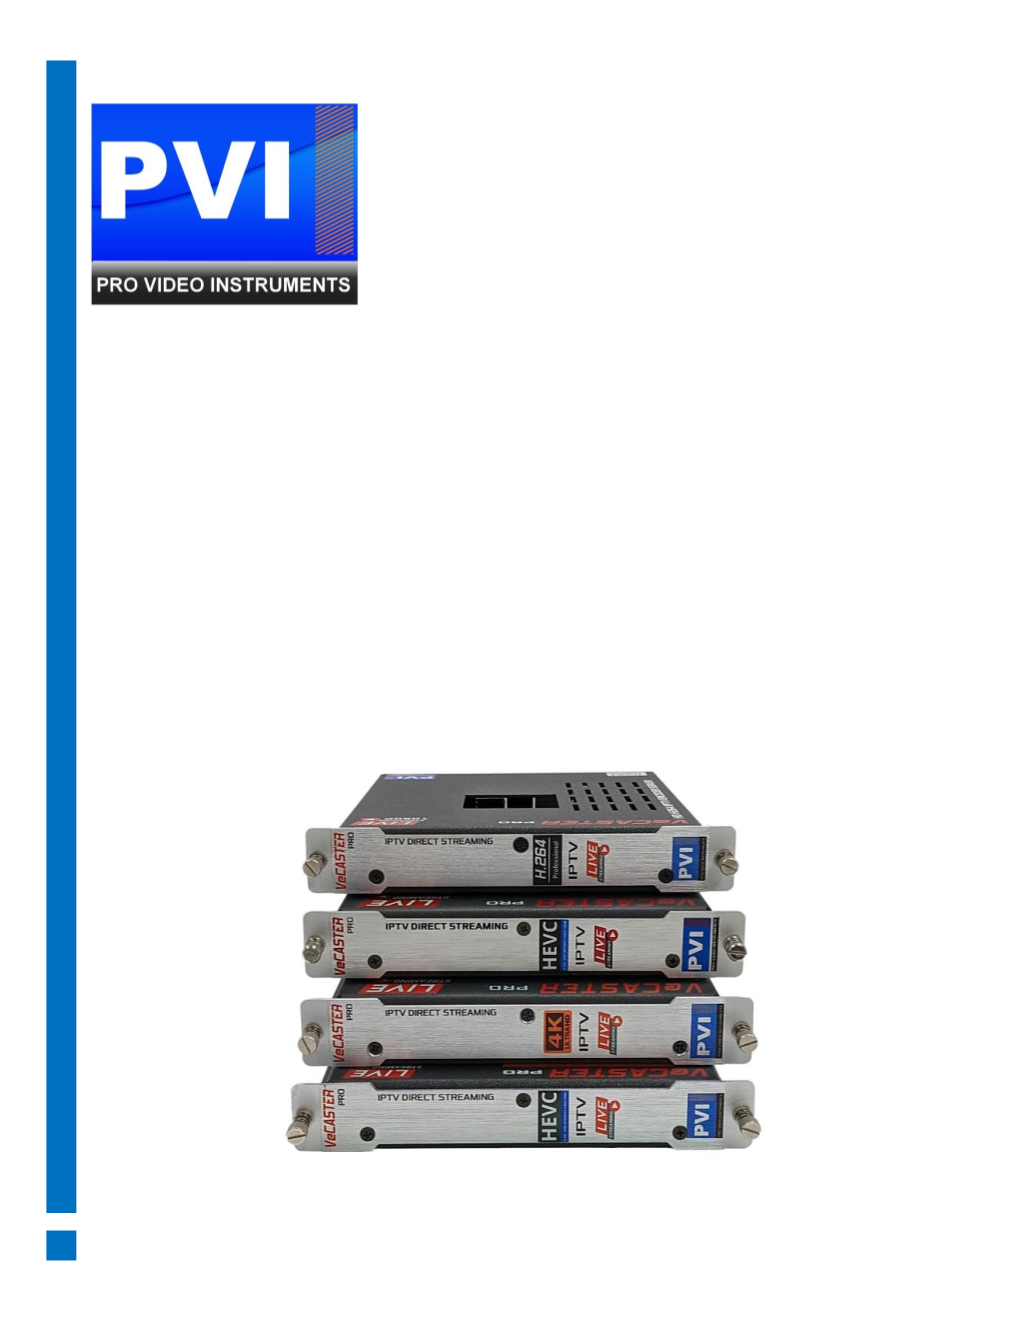 Vecaster Series Manual V2.3.Pdf